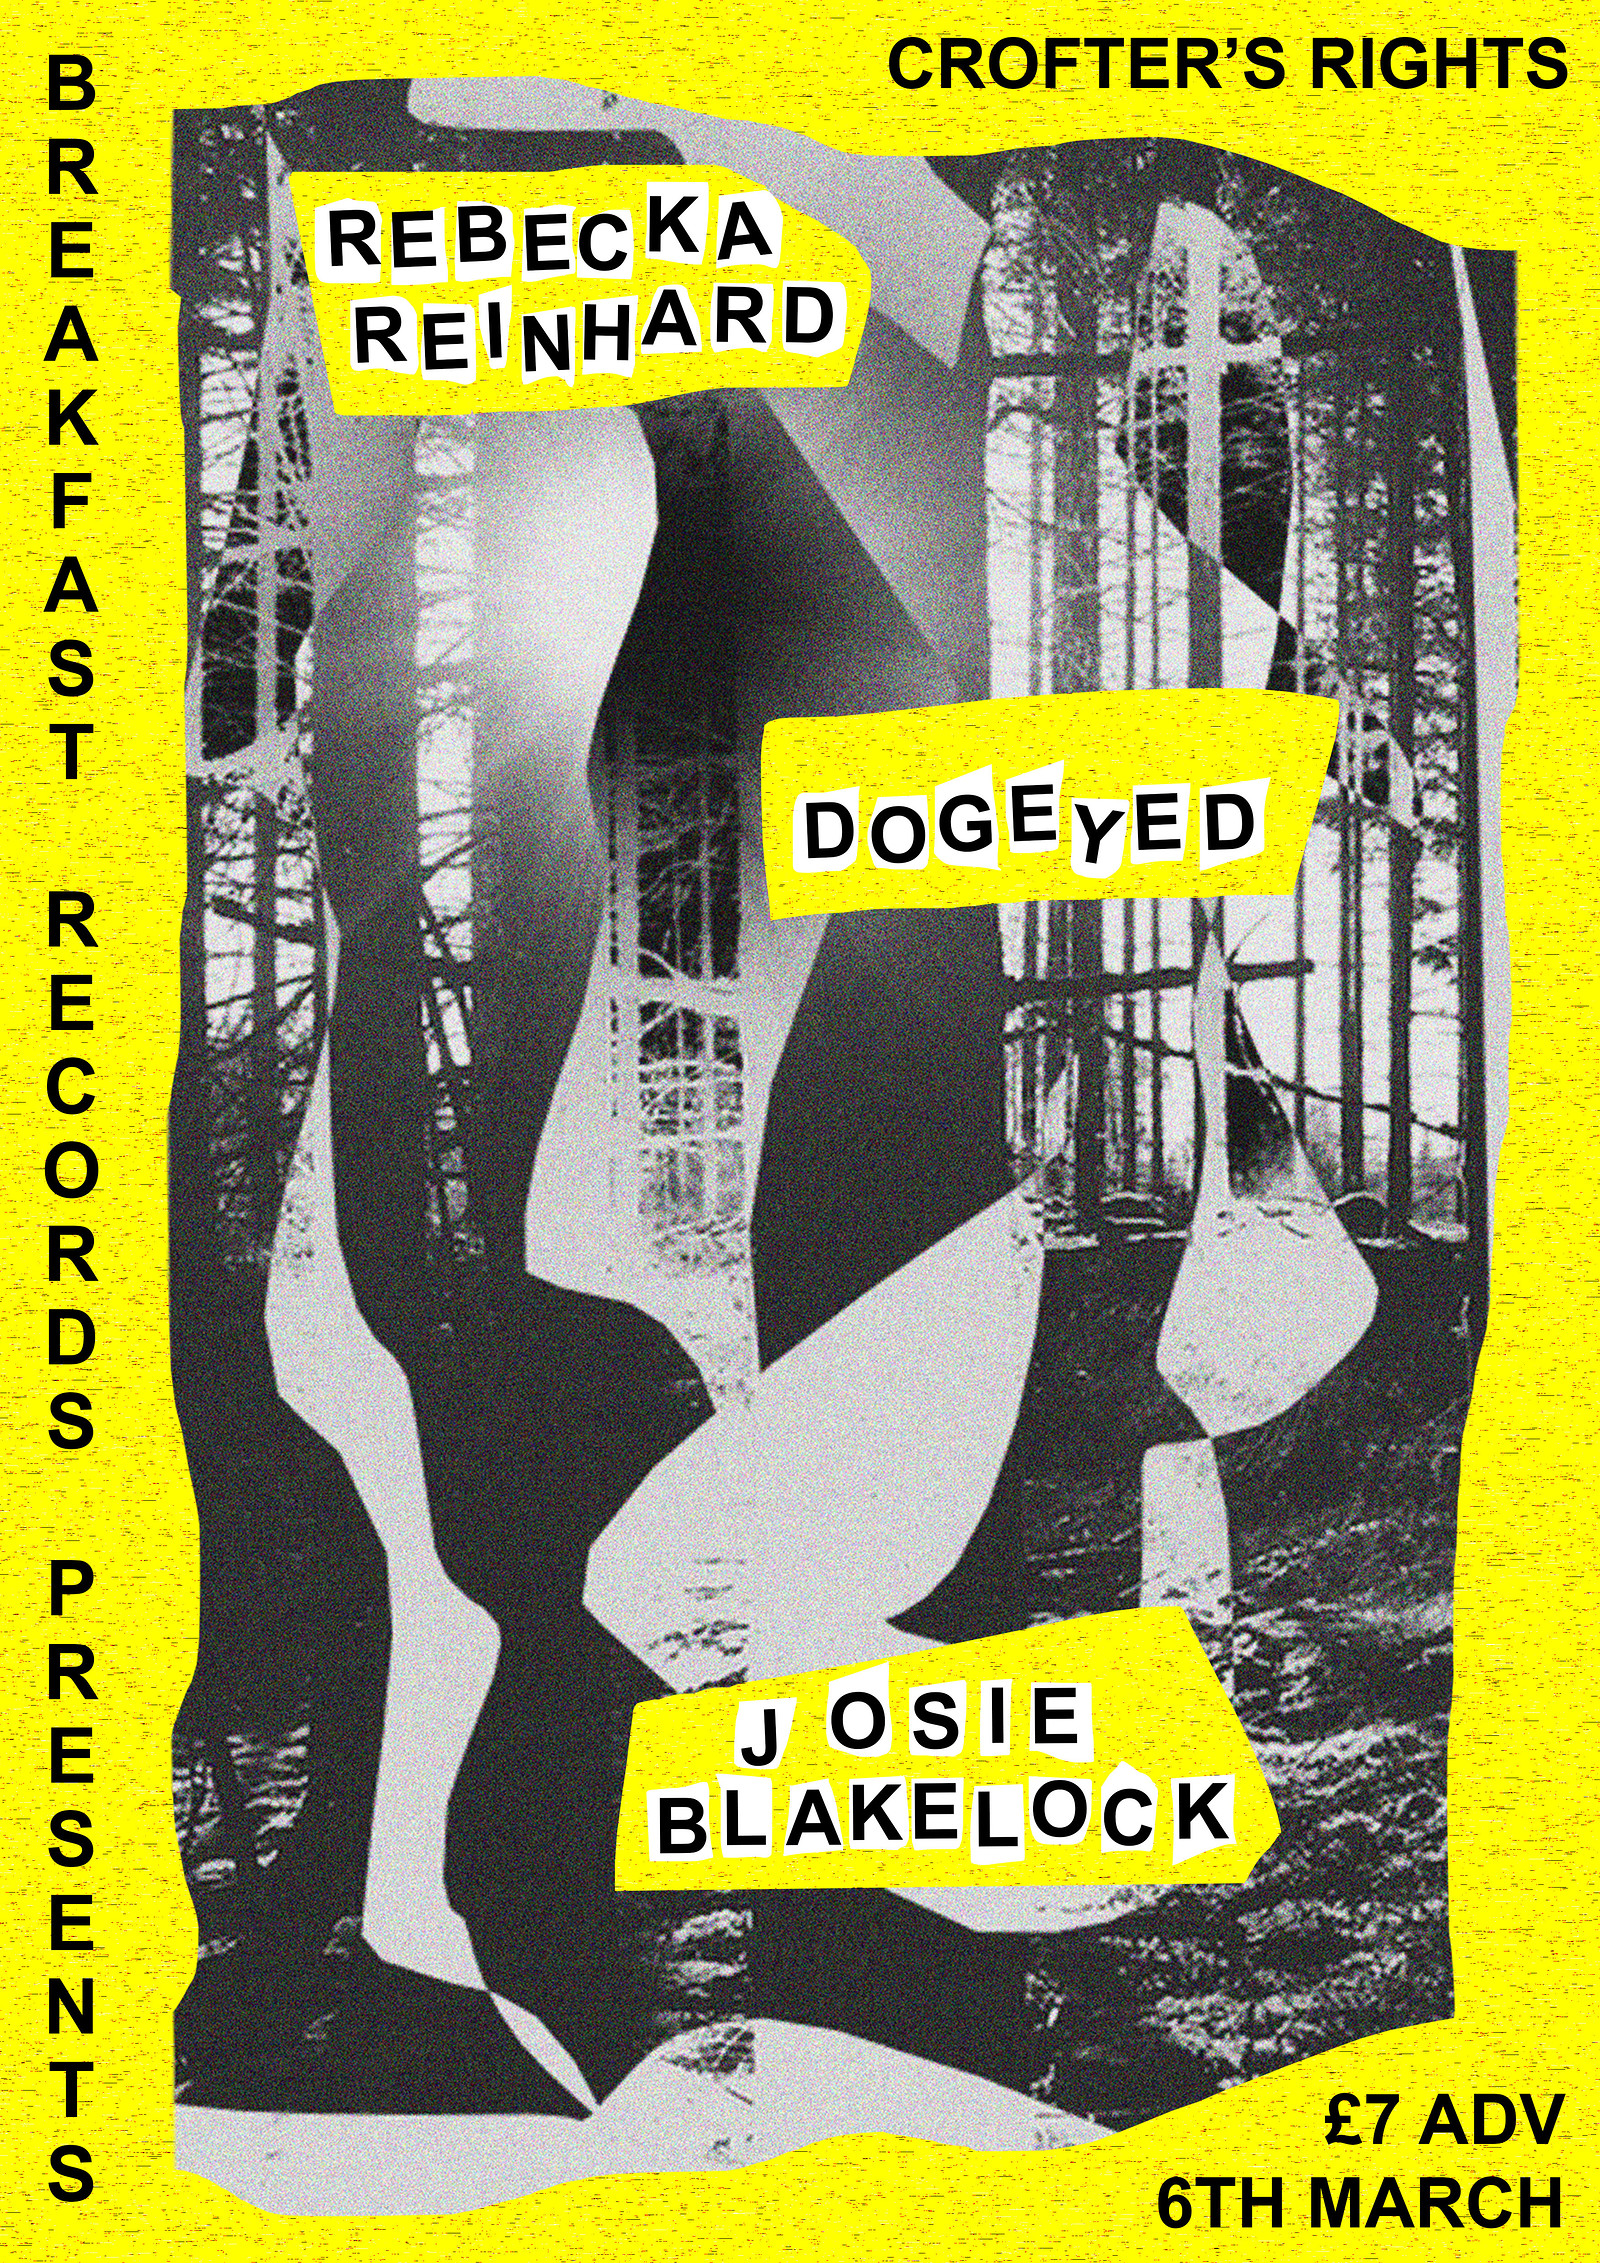 Dogeyed, Rebecka Reinhard & Josie Blakelock at Crofters Rights